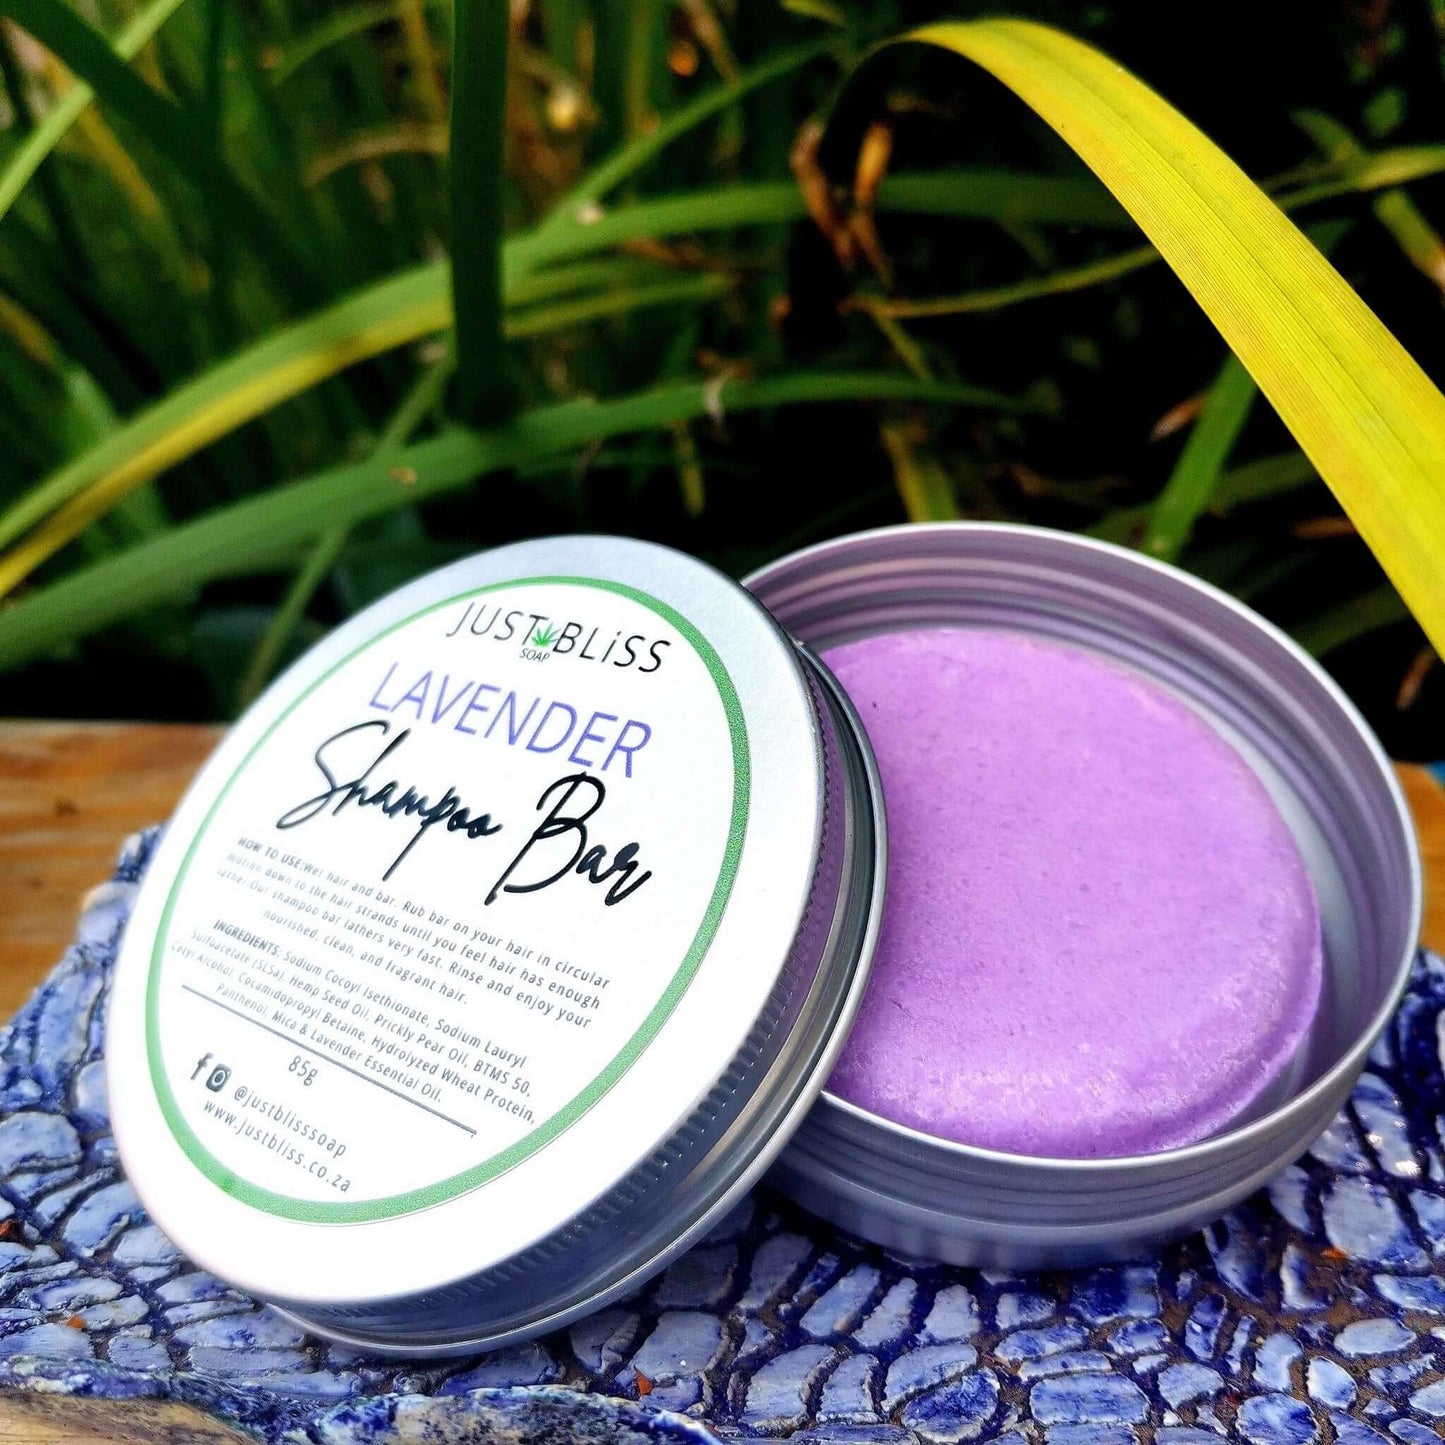 JUSTBLISS: SHAMPOO BAR in tin: lavender